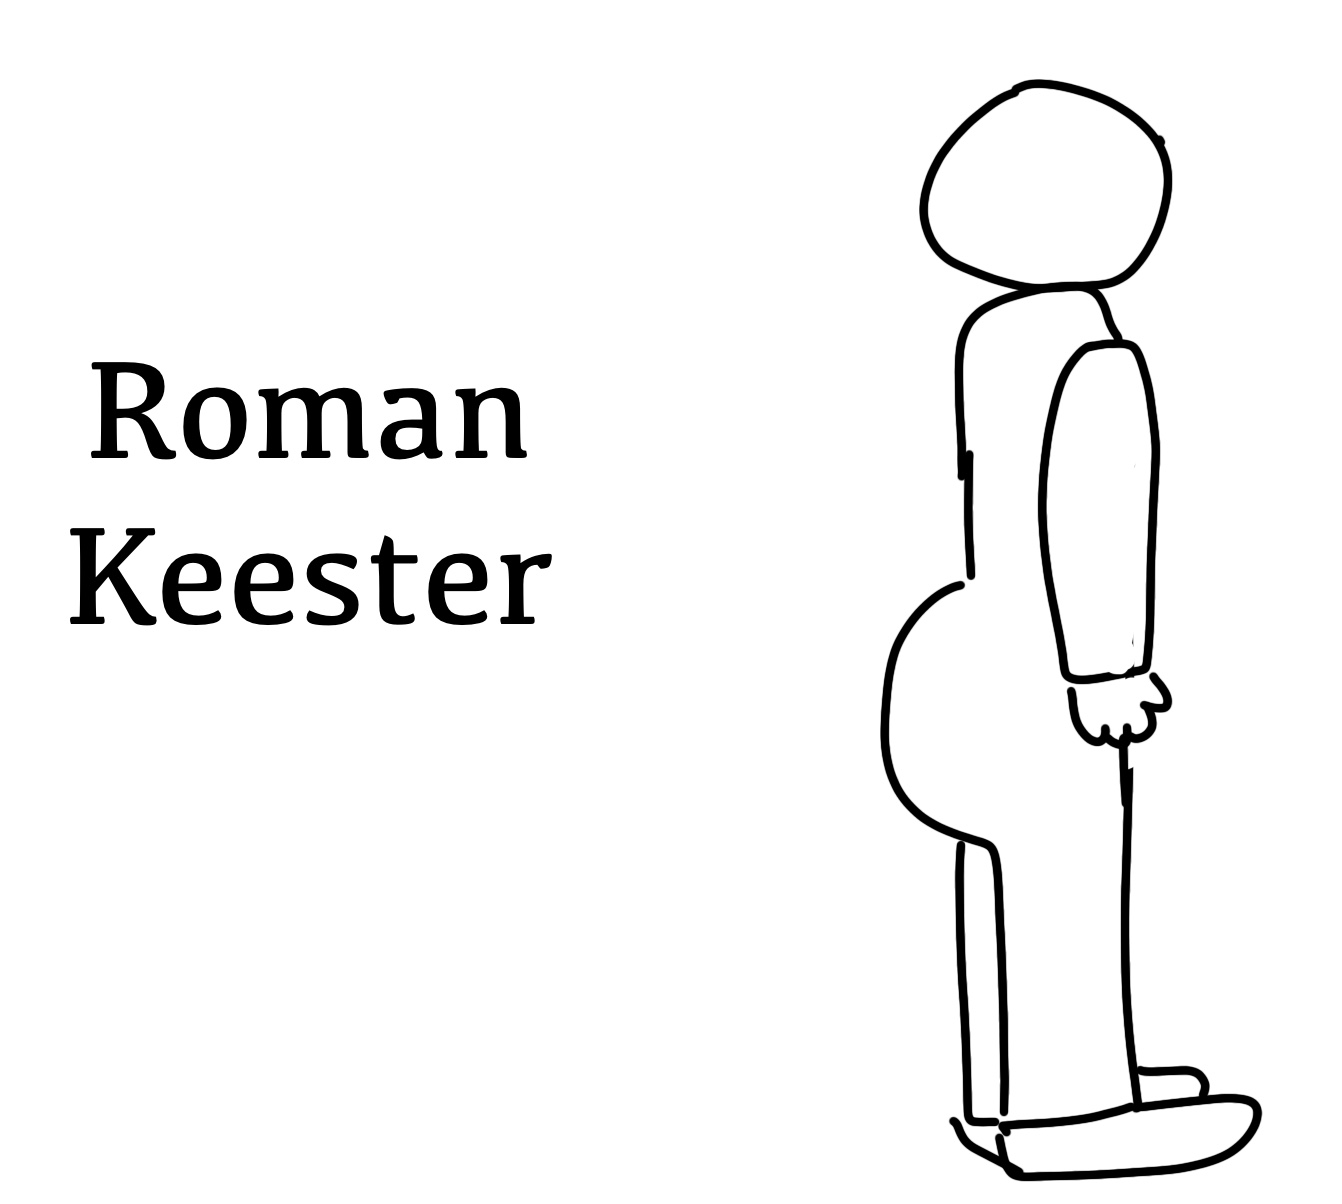 Roman Keester